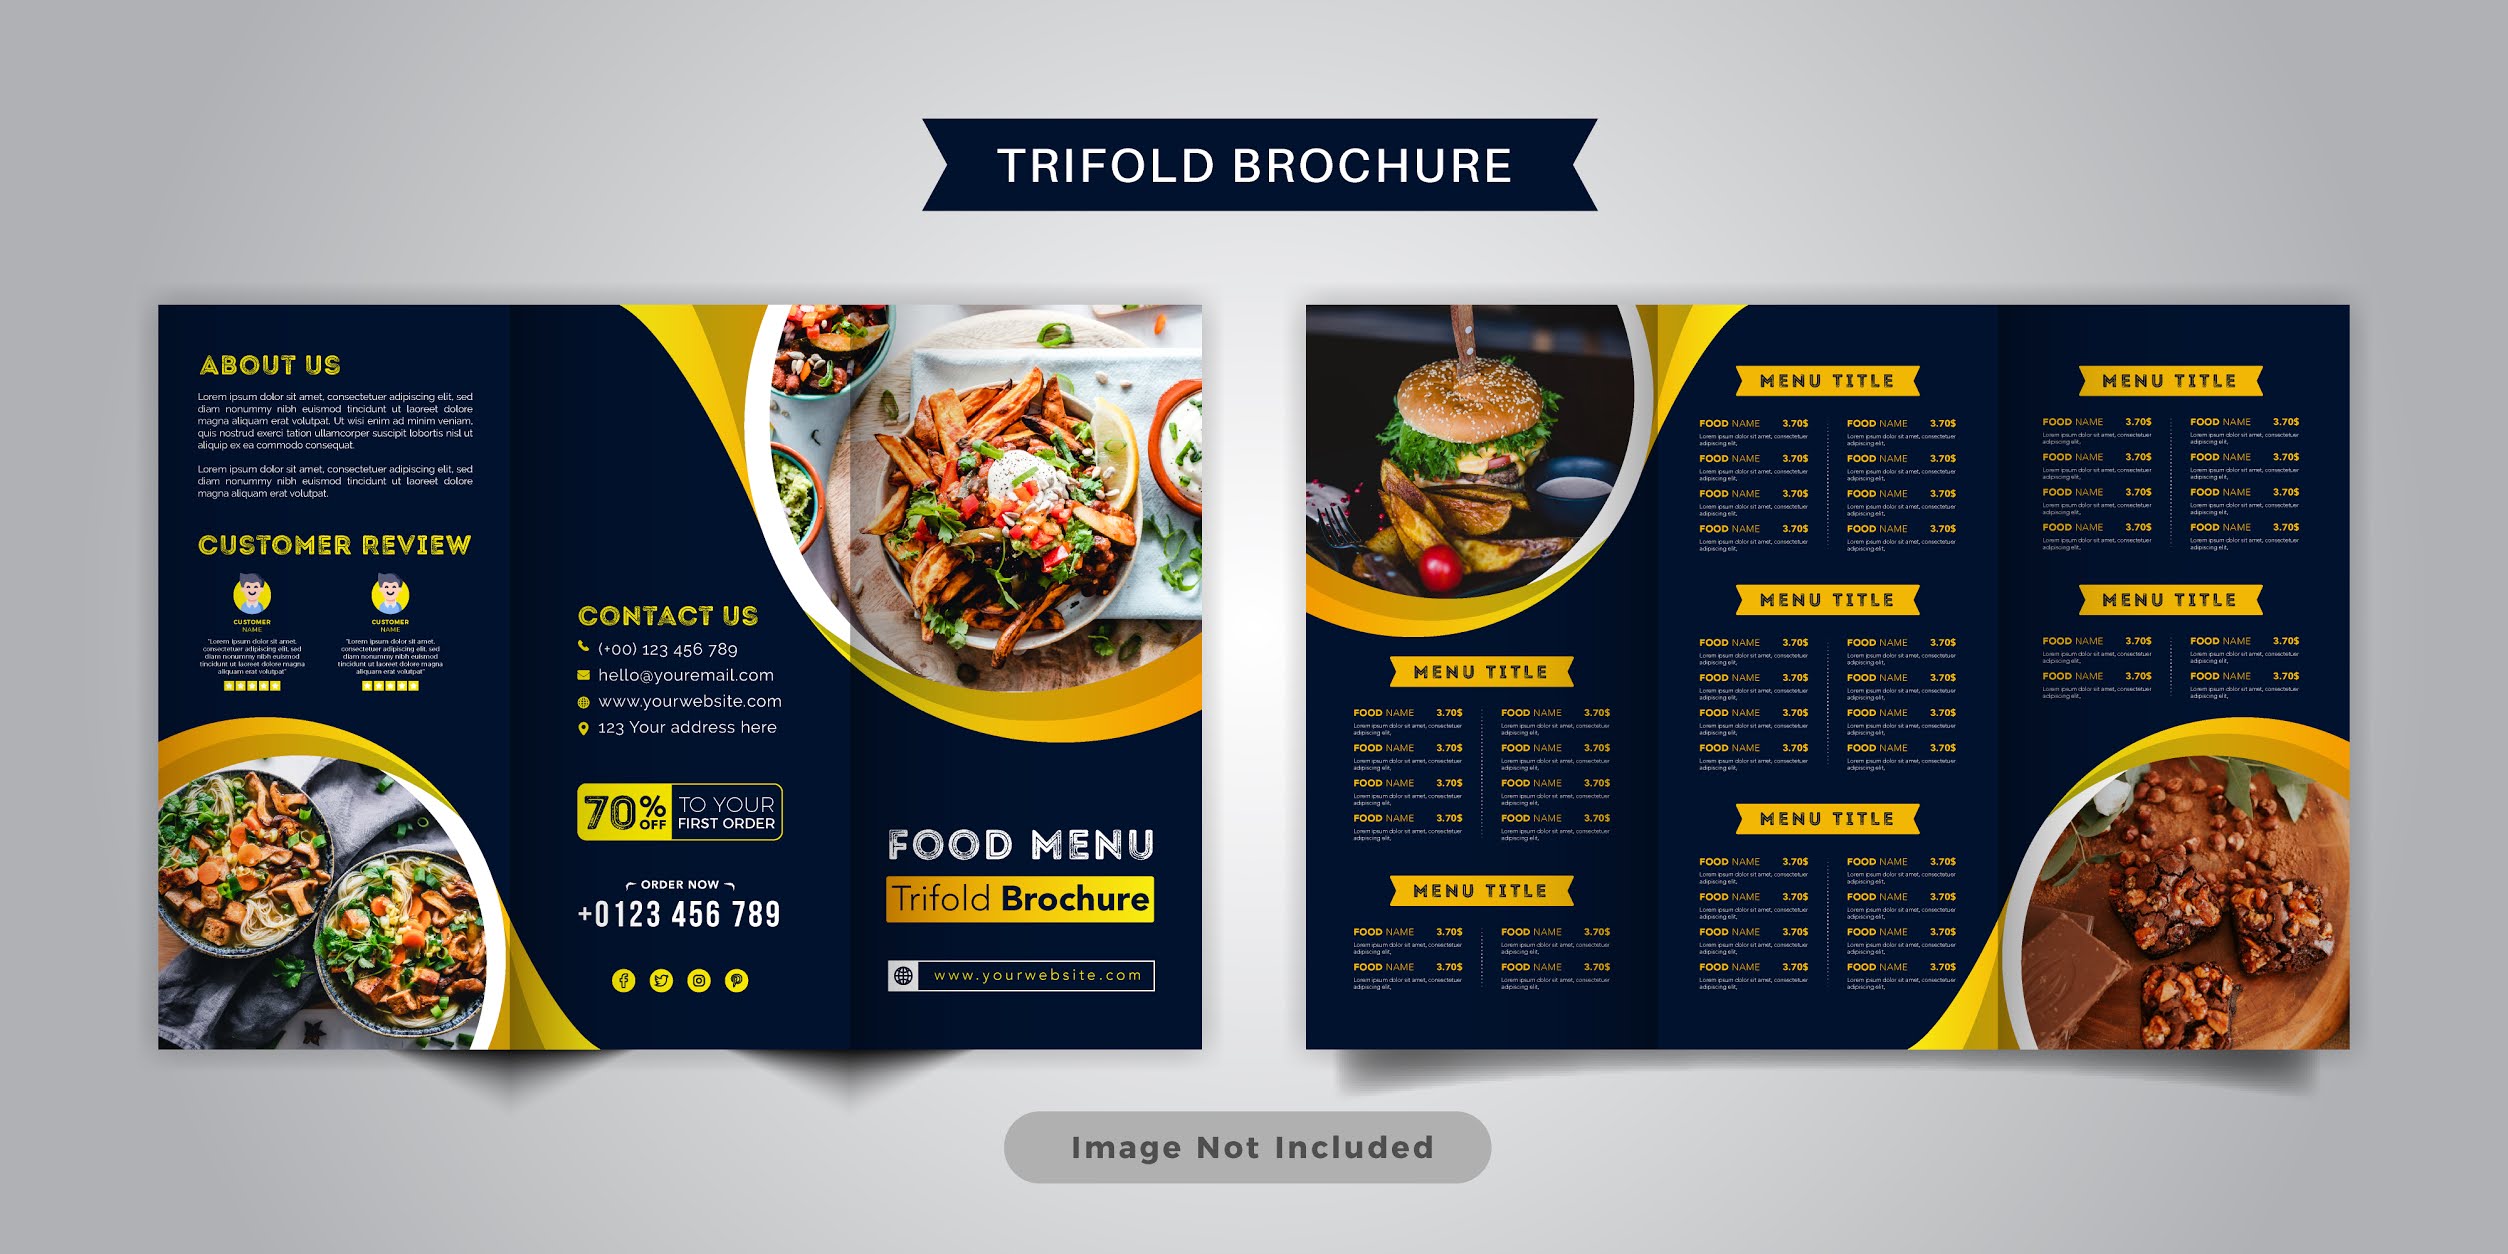 Free download food brochure 7 professional designs 1 set in vector format